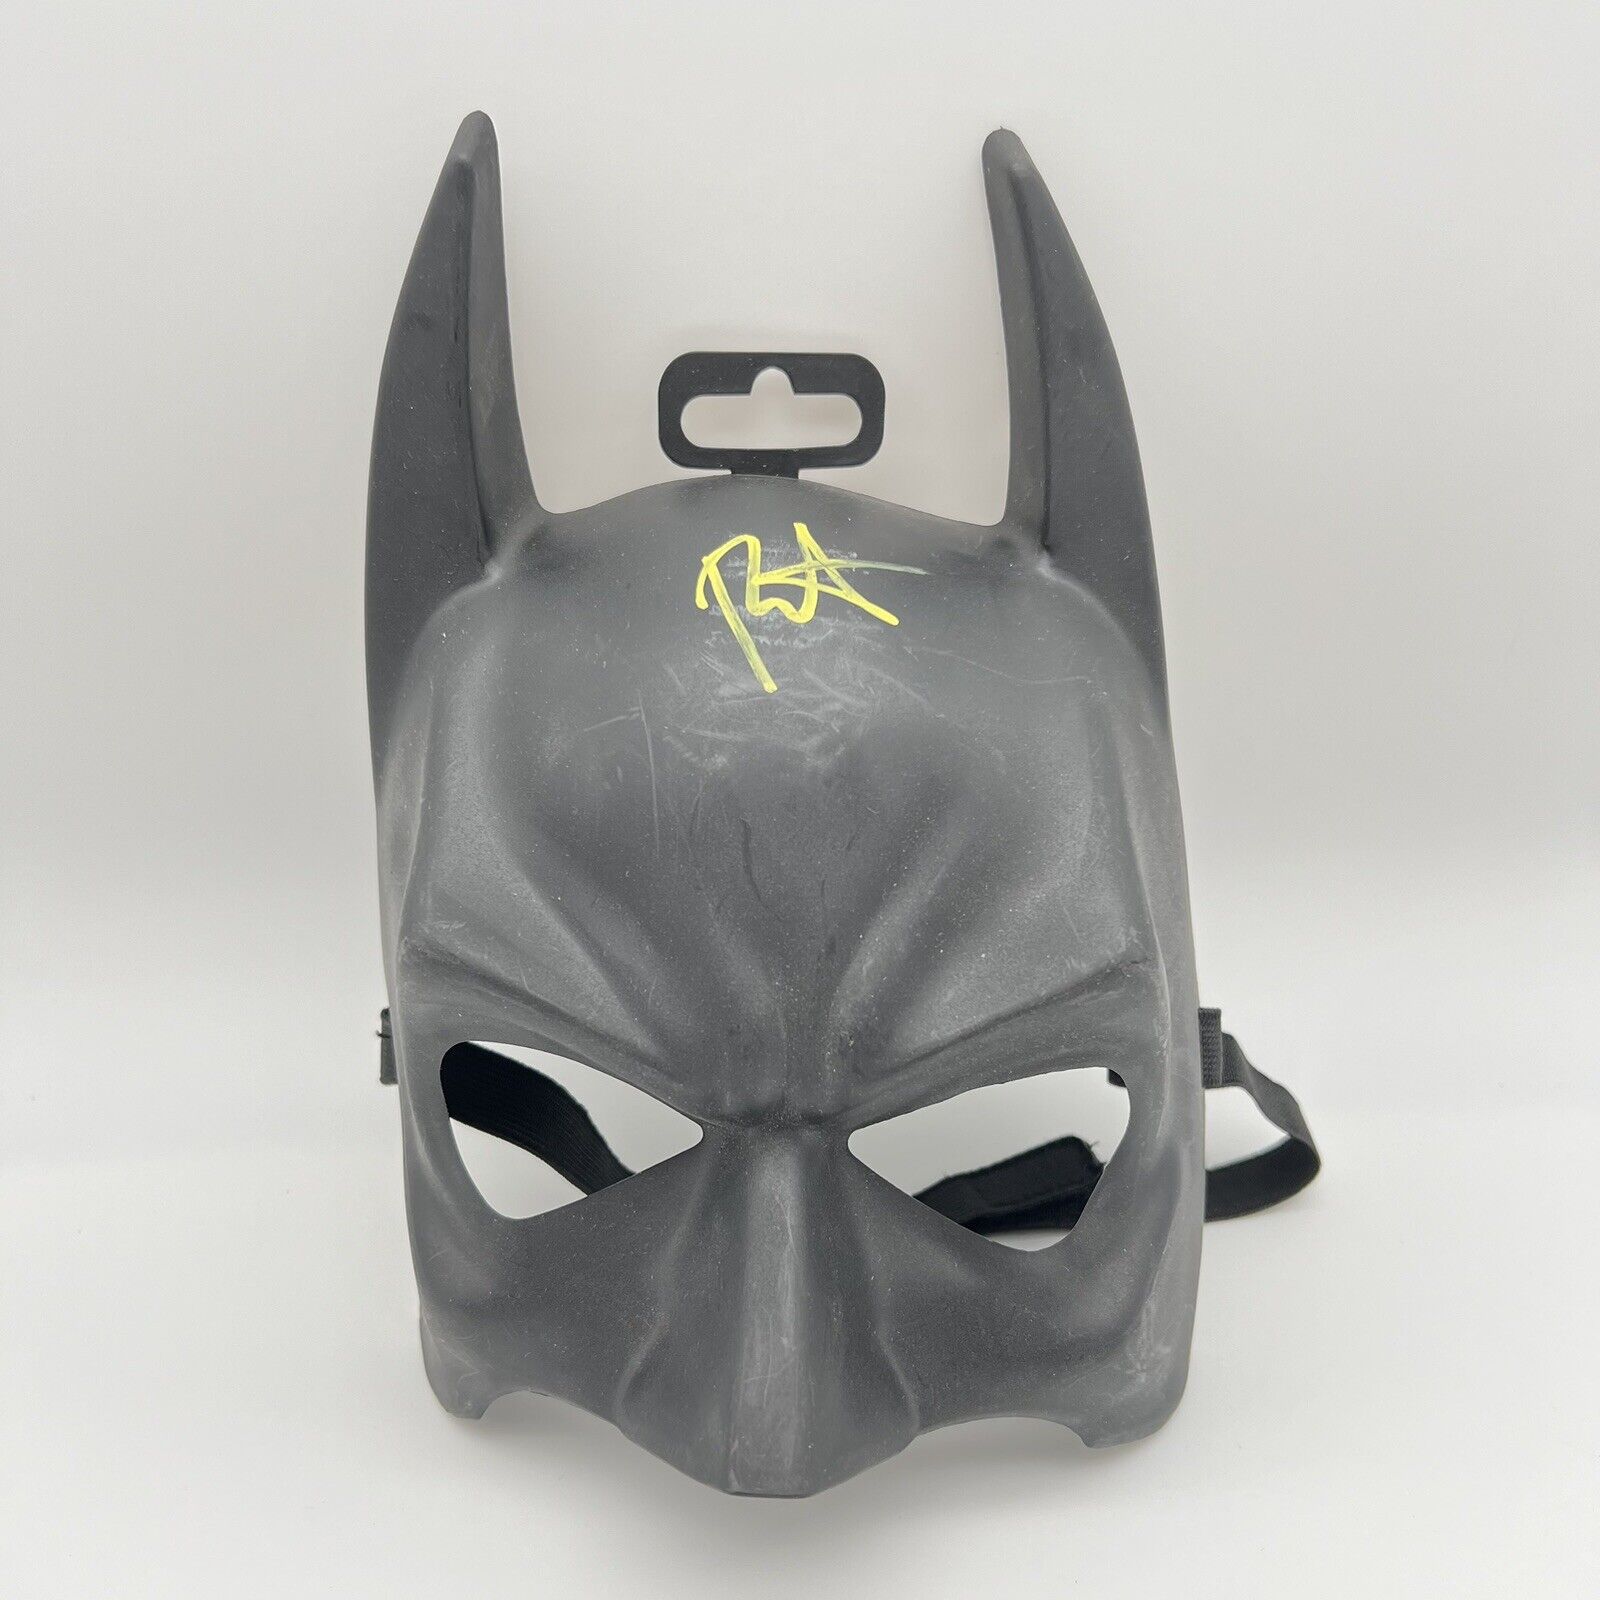 BAM BOX Batman Mask Signed Auto By Roger Craig Smith Voiced Animated Batman